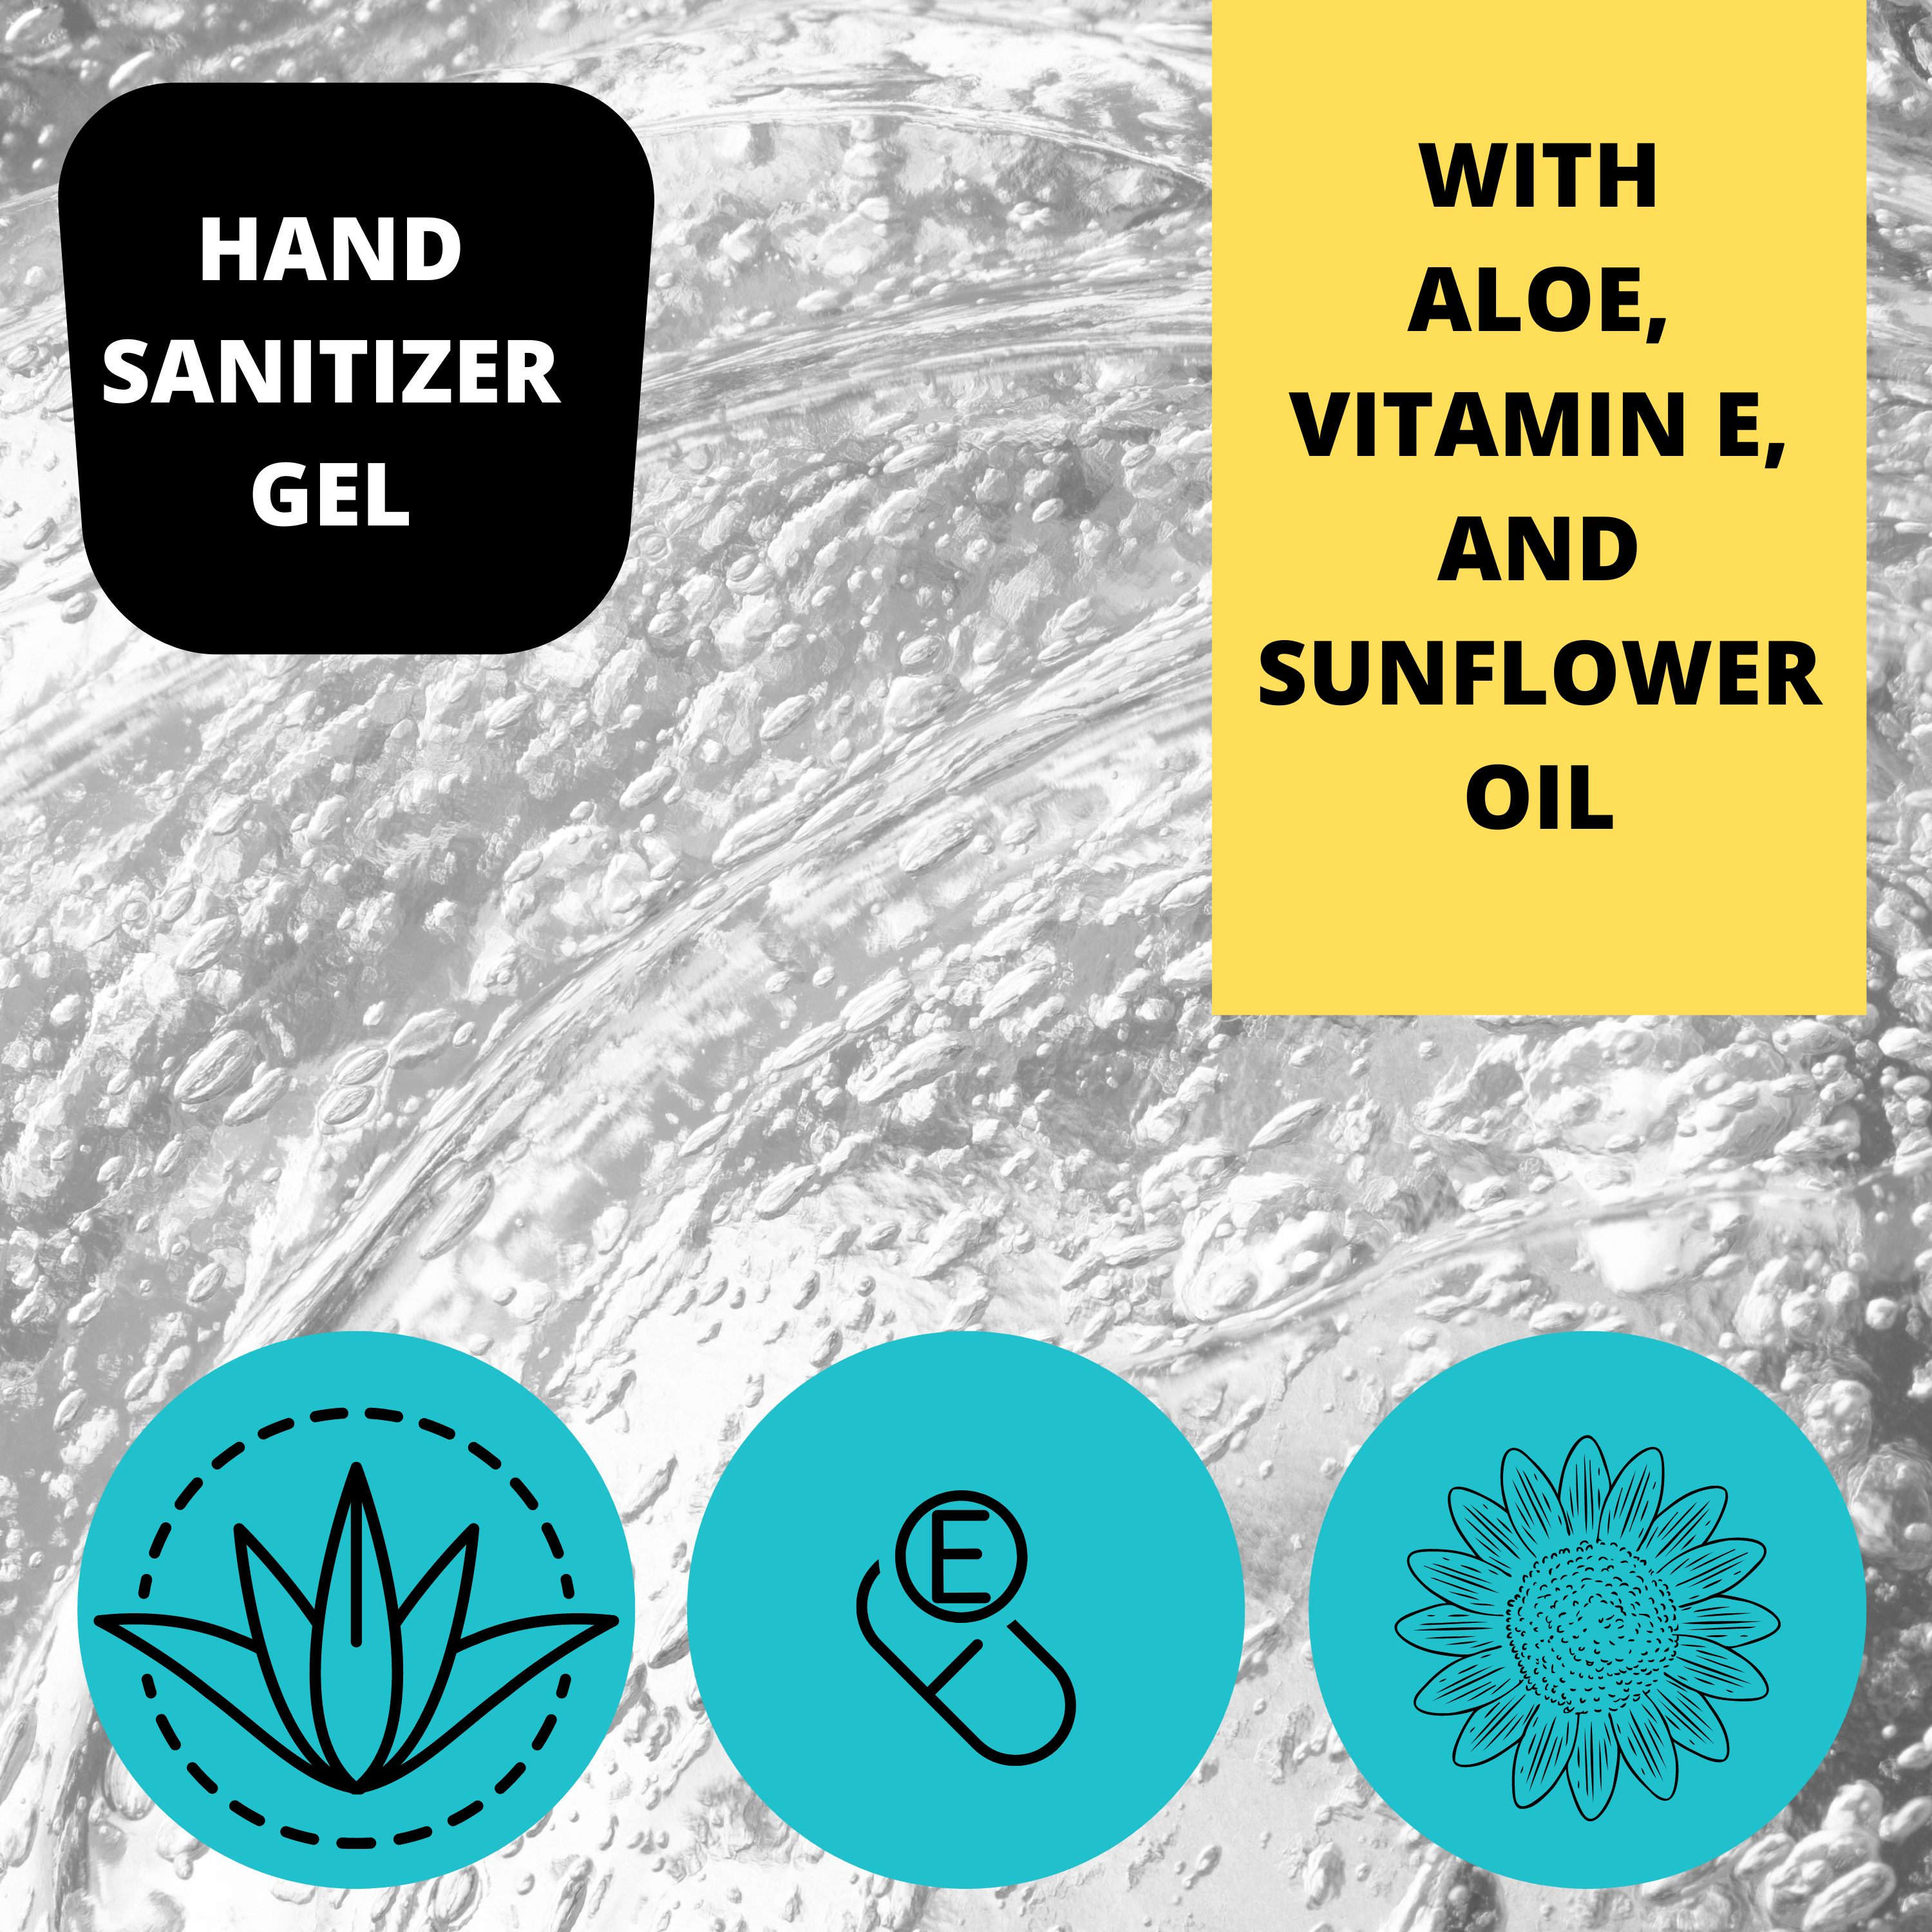 Black Canyon Bergamot & Asiatic Lily Scented Hand Sanitizer Gel